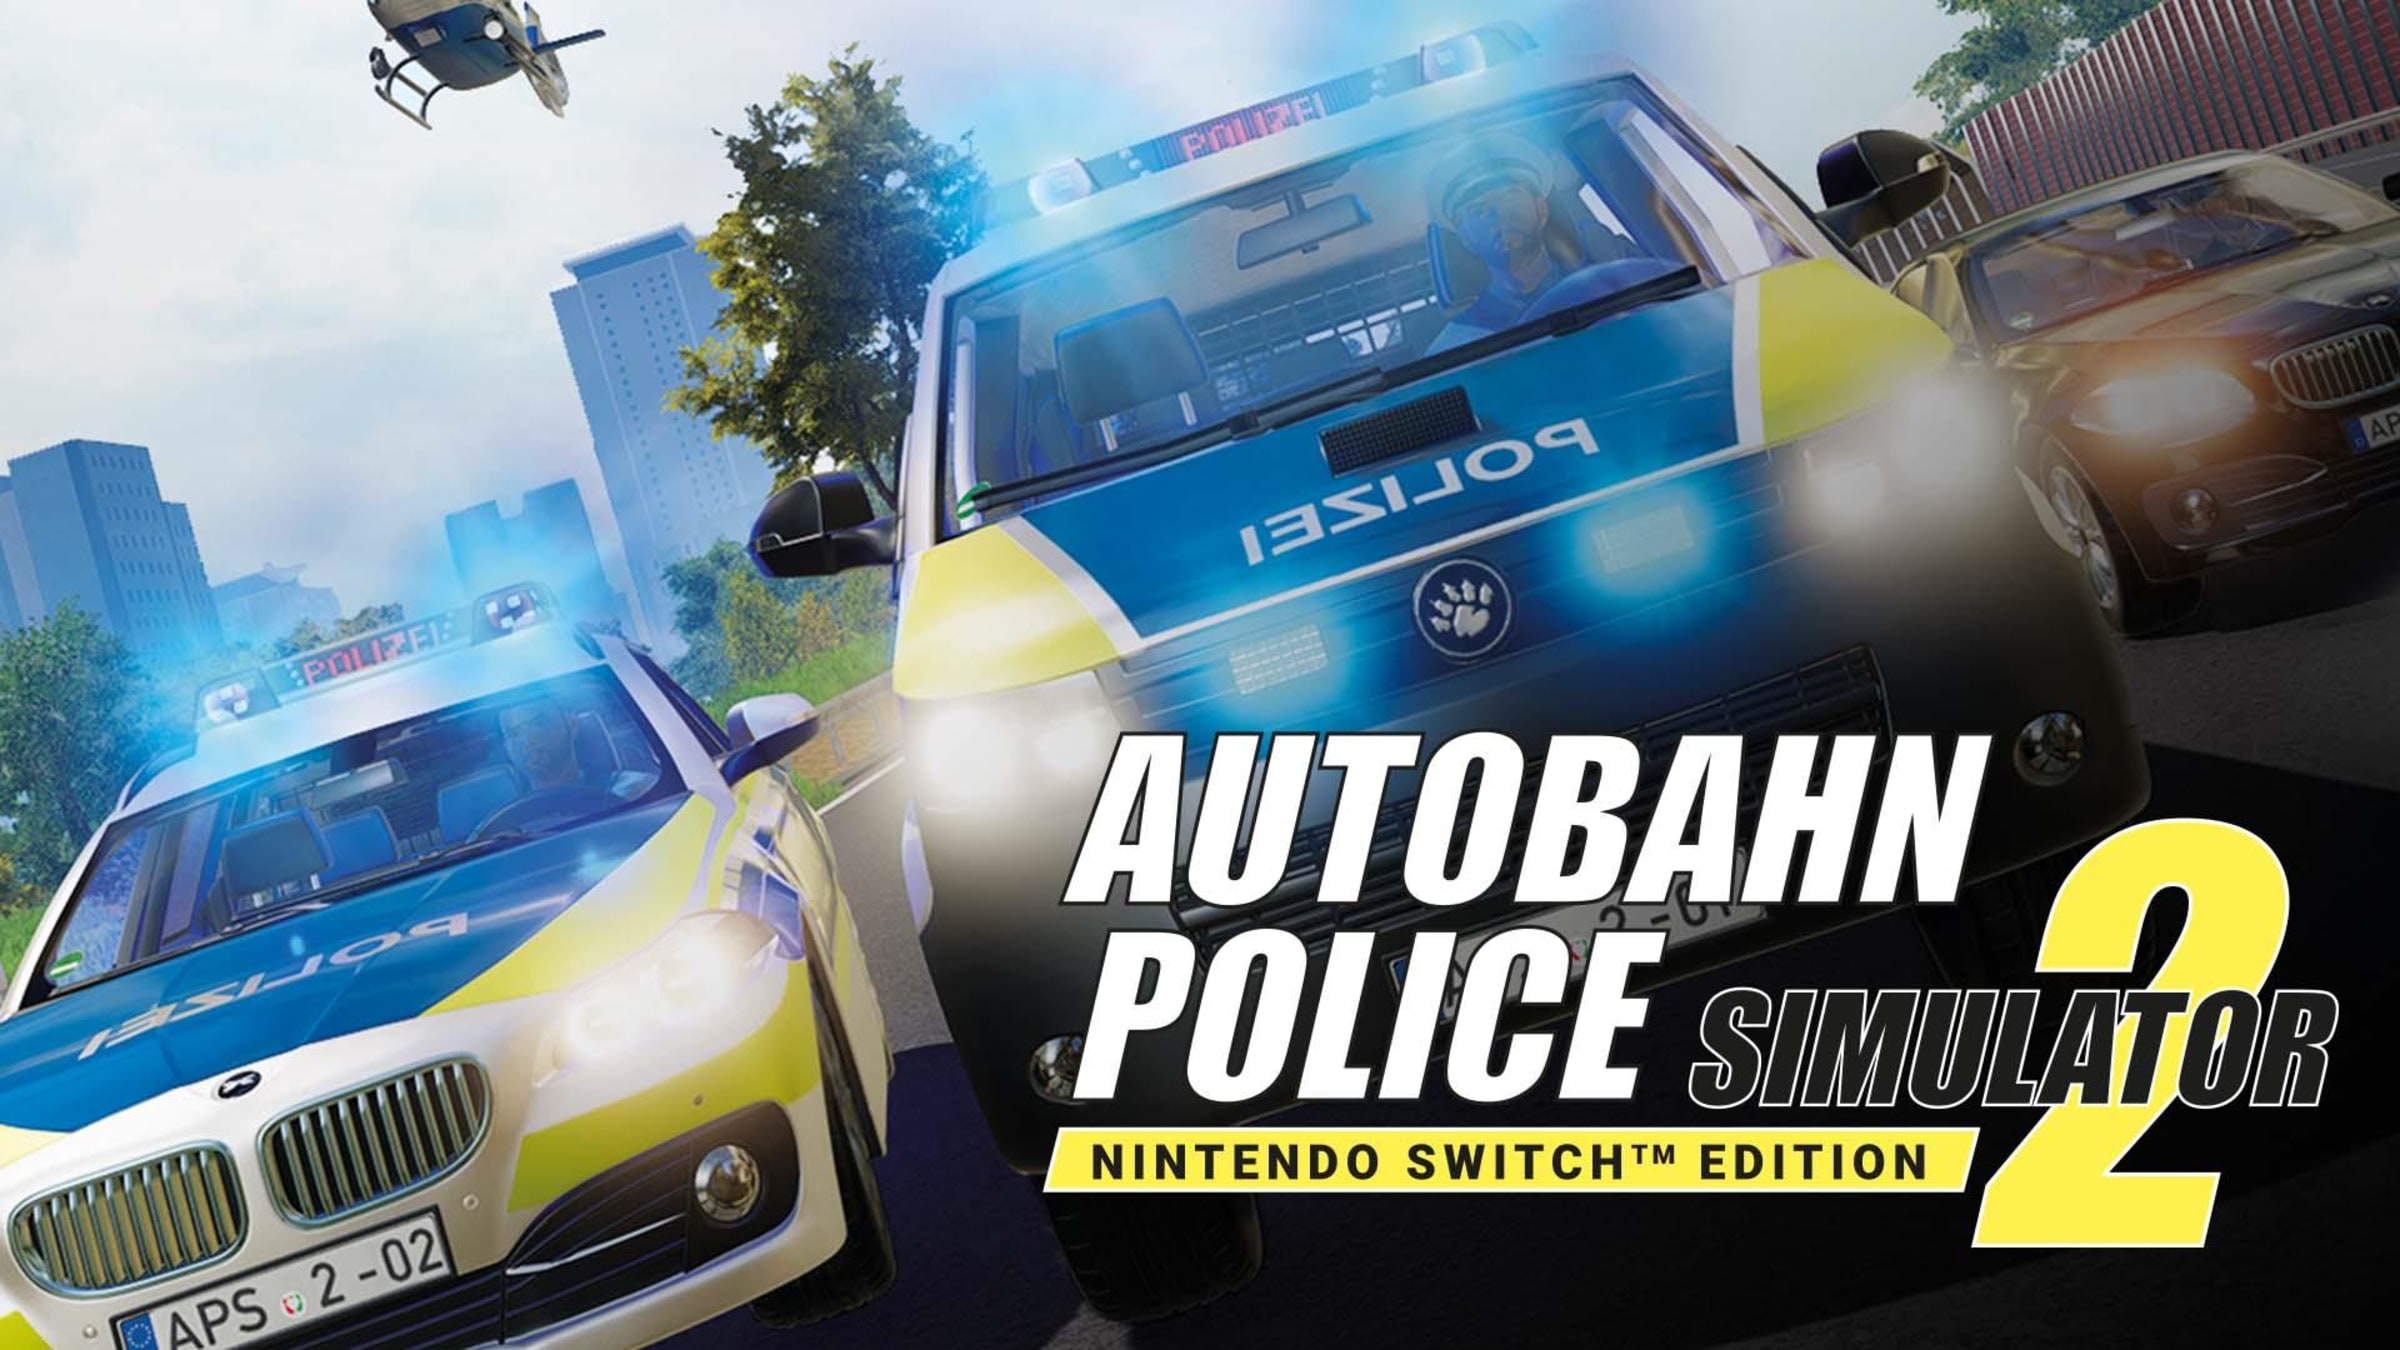 Autobahn Polizei Simulator 2 - Nintendo Switch™ Edition for 